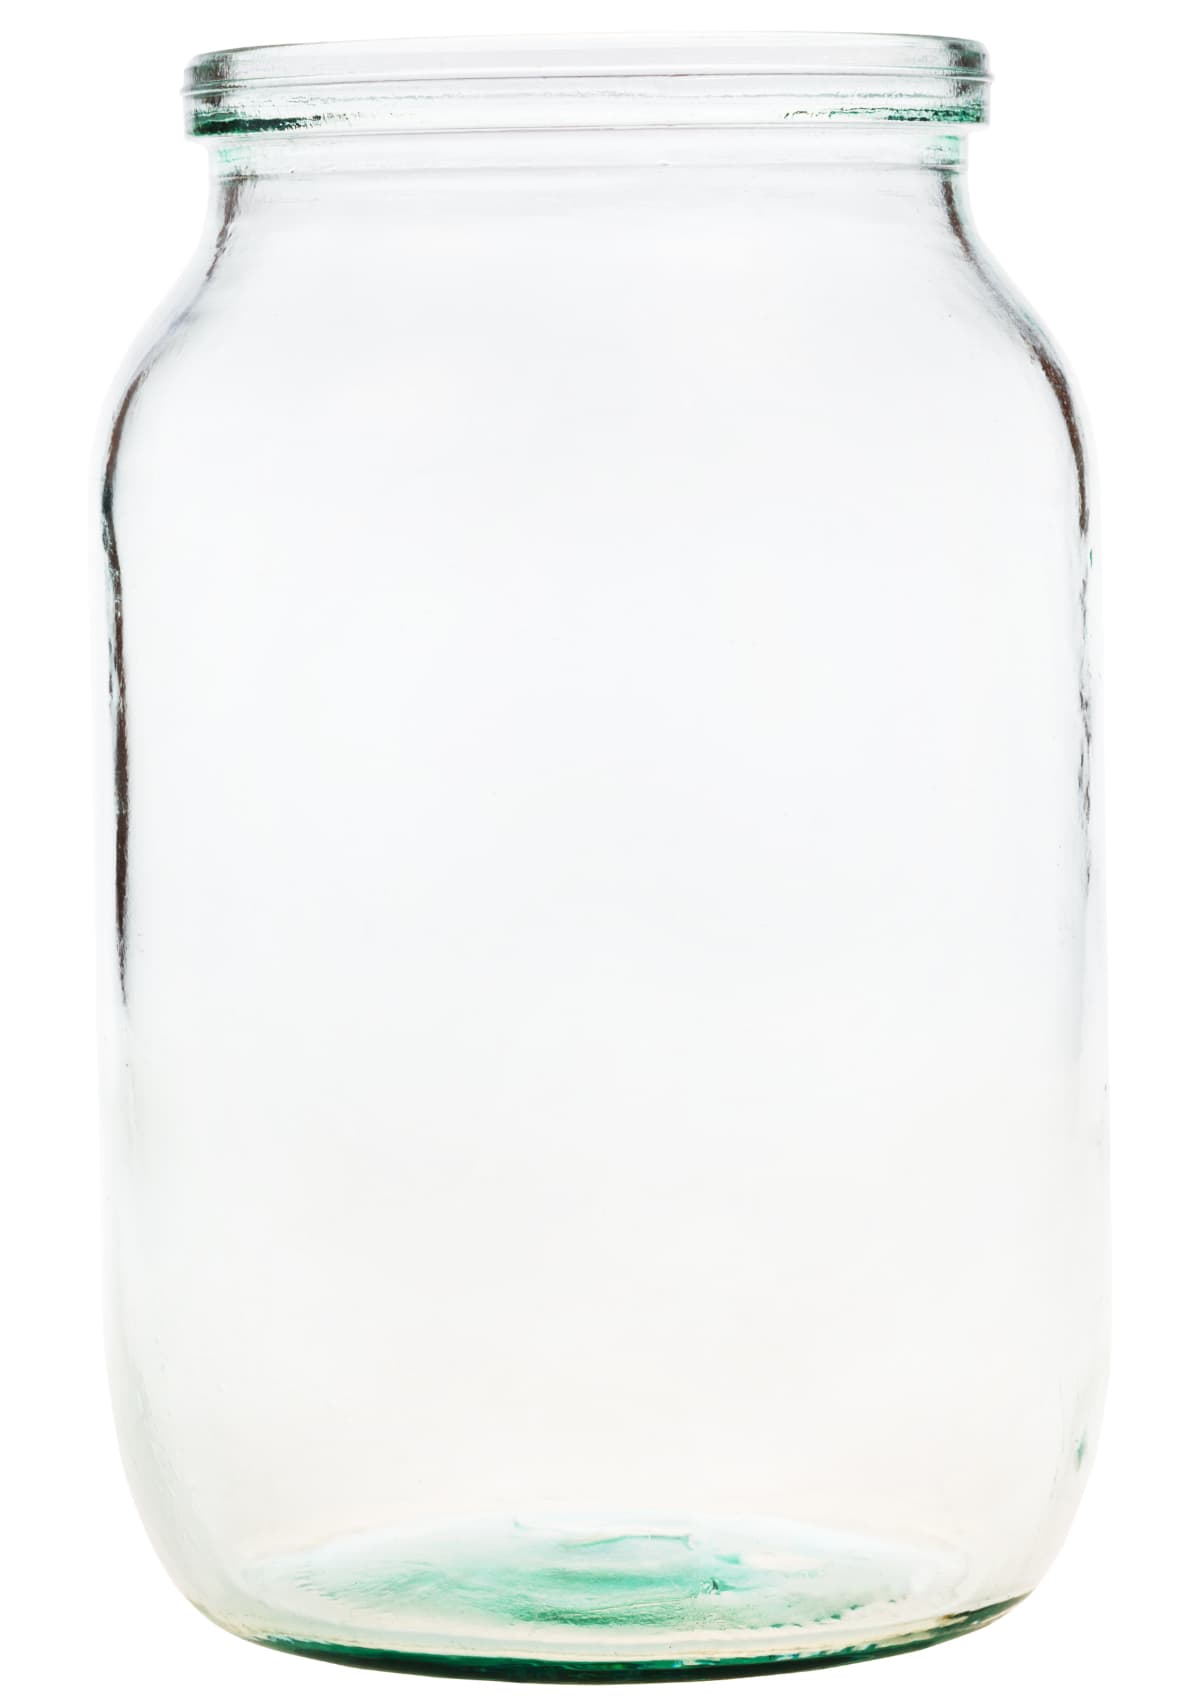 A one gallon jar.